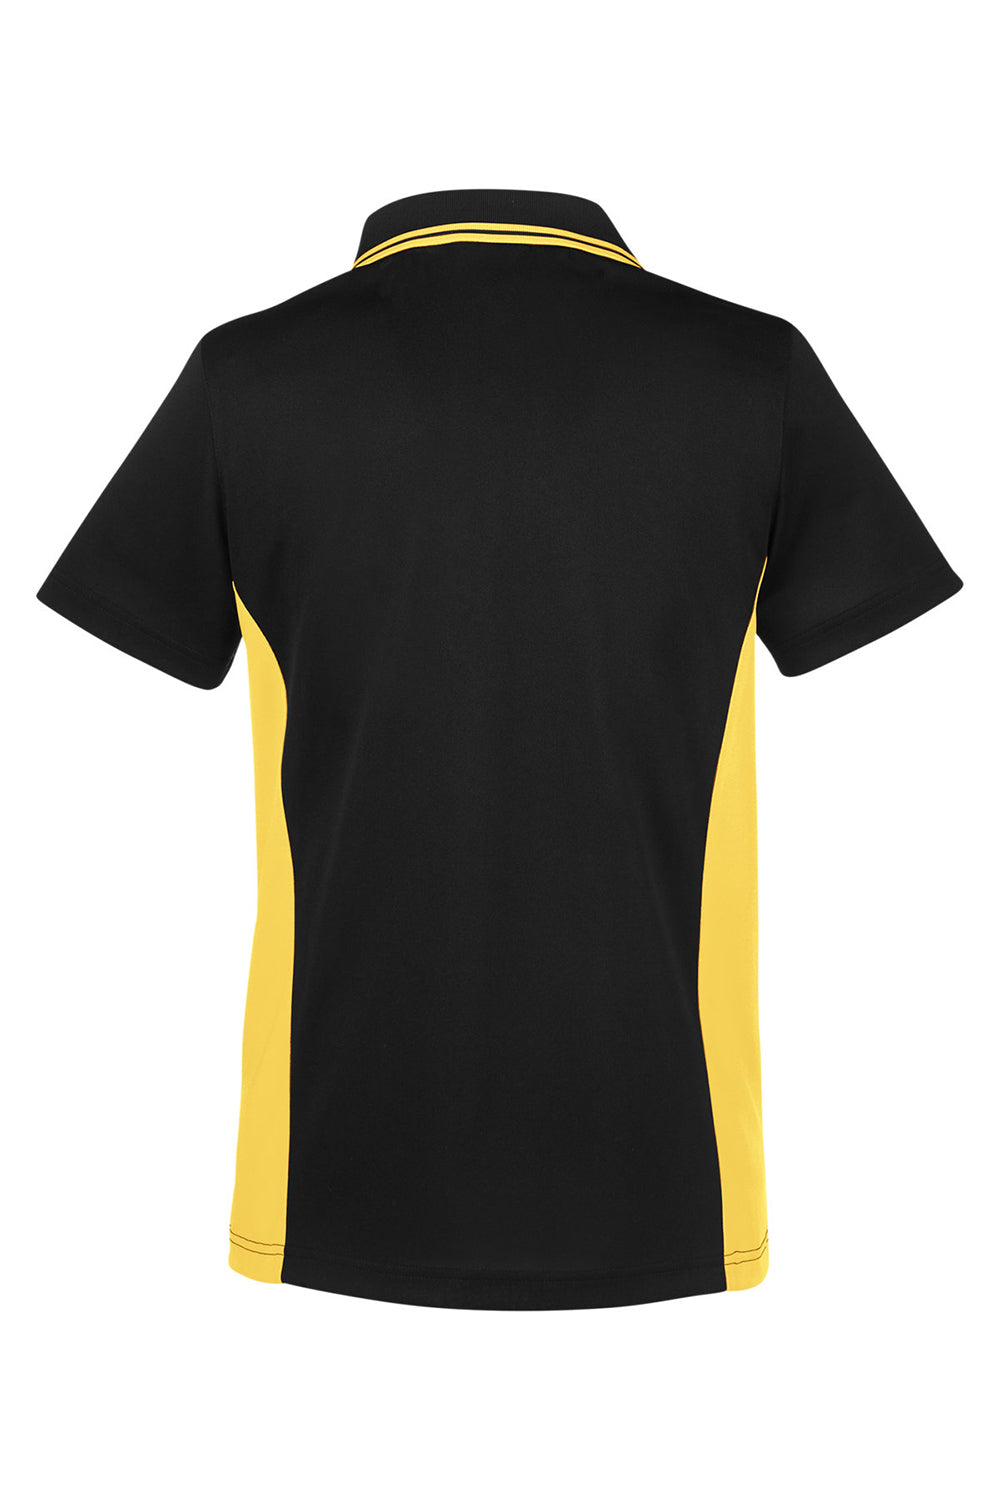 Harriton M386W Womens Flash Performance Moisture Wicking Colorblock Short Sleeve Polo Shirt Black/Sunray Yellow Flat Back